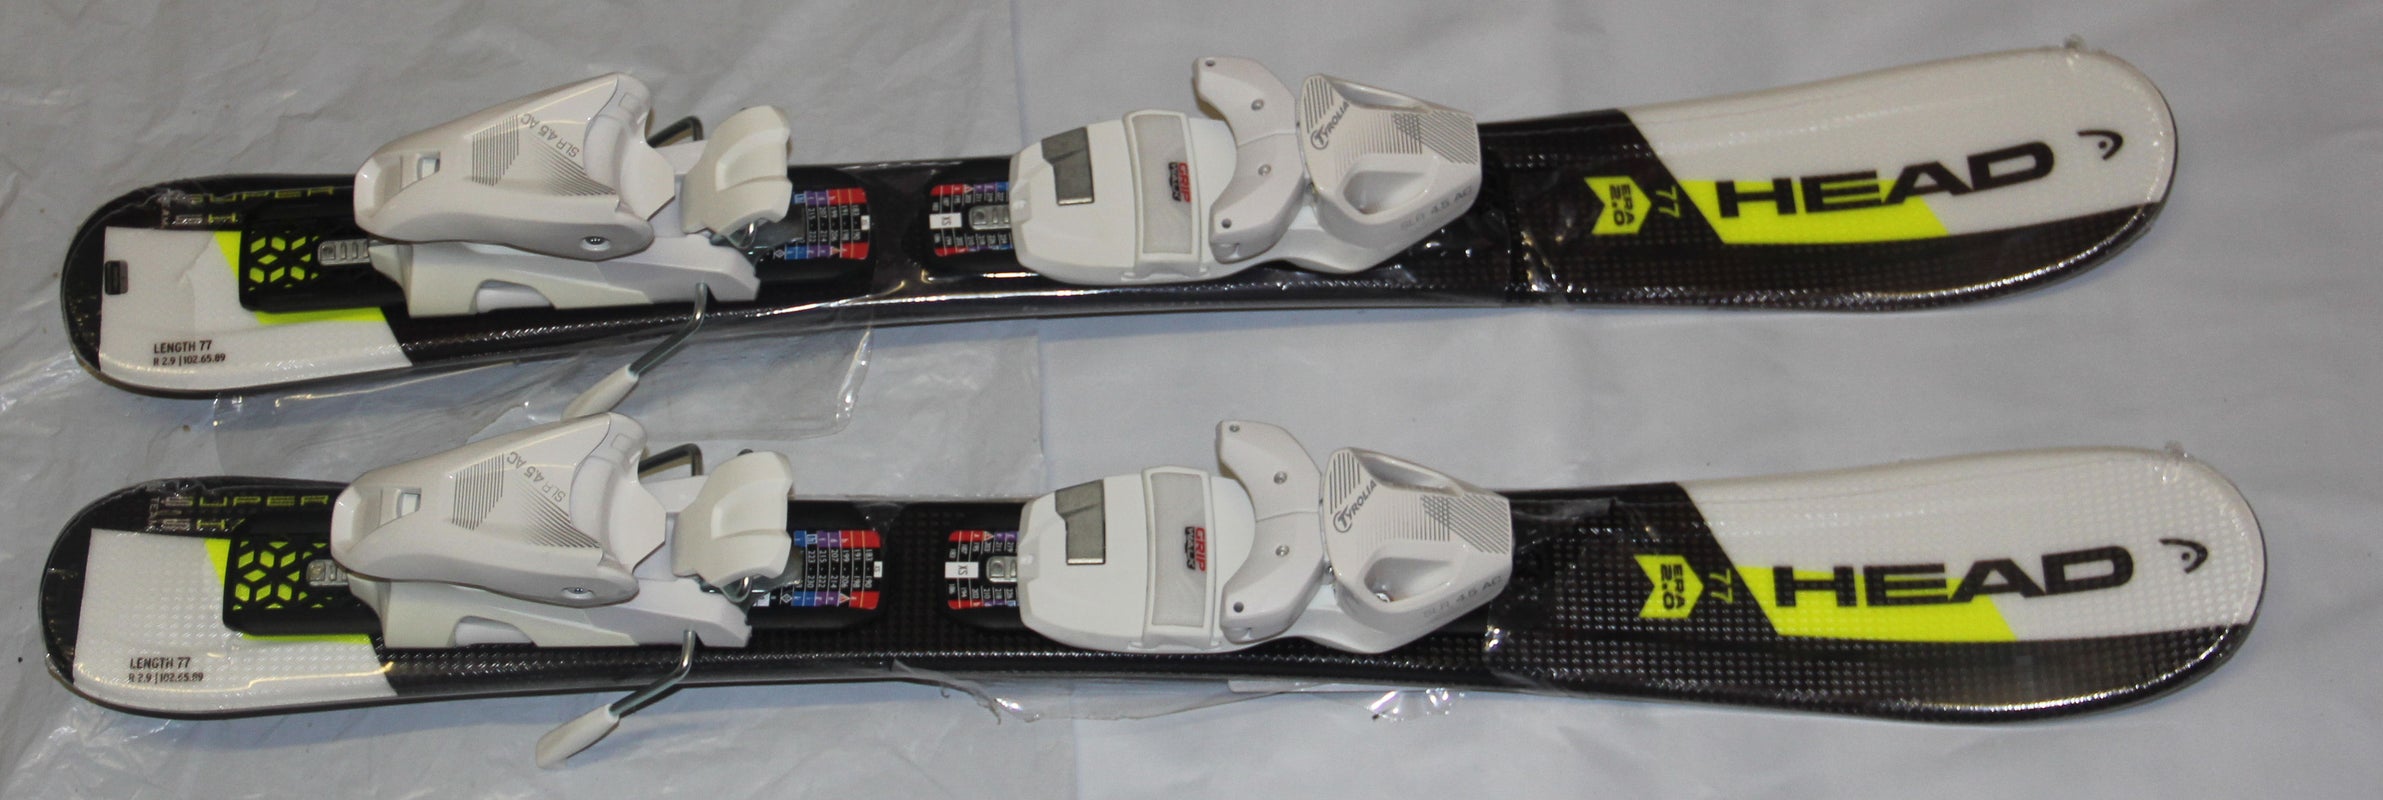 NEW HEAD Supershape kids Skis 77cm + size adjustable bindings SLR4.5 NEW